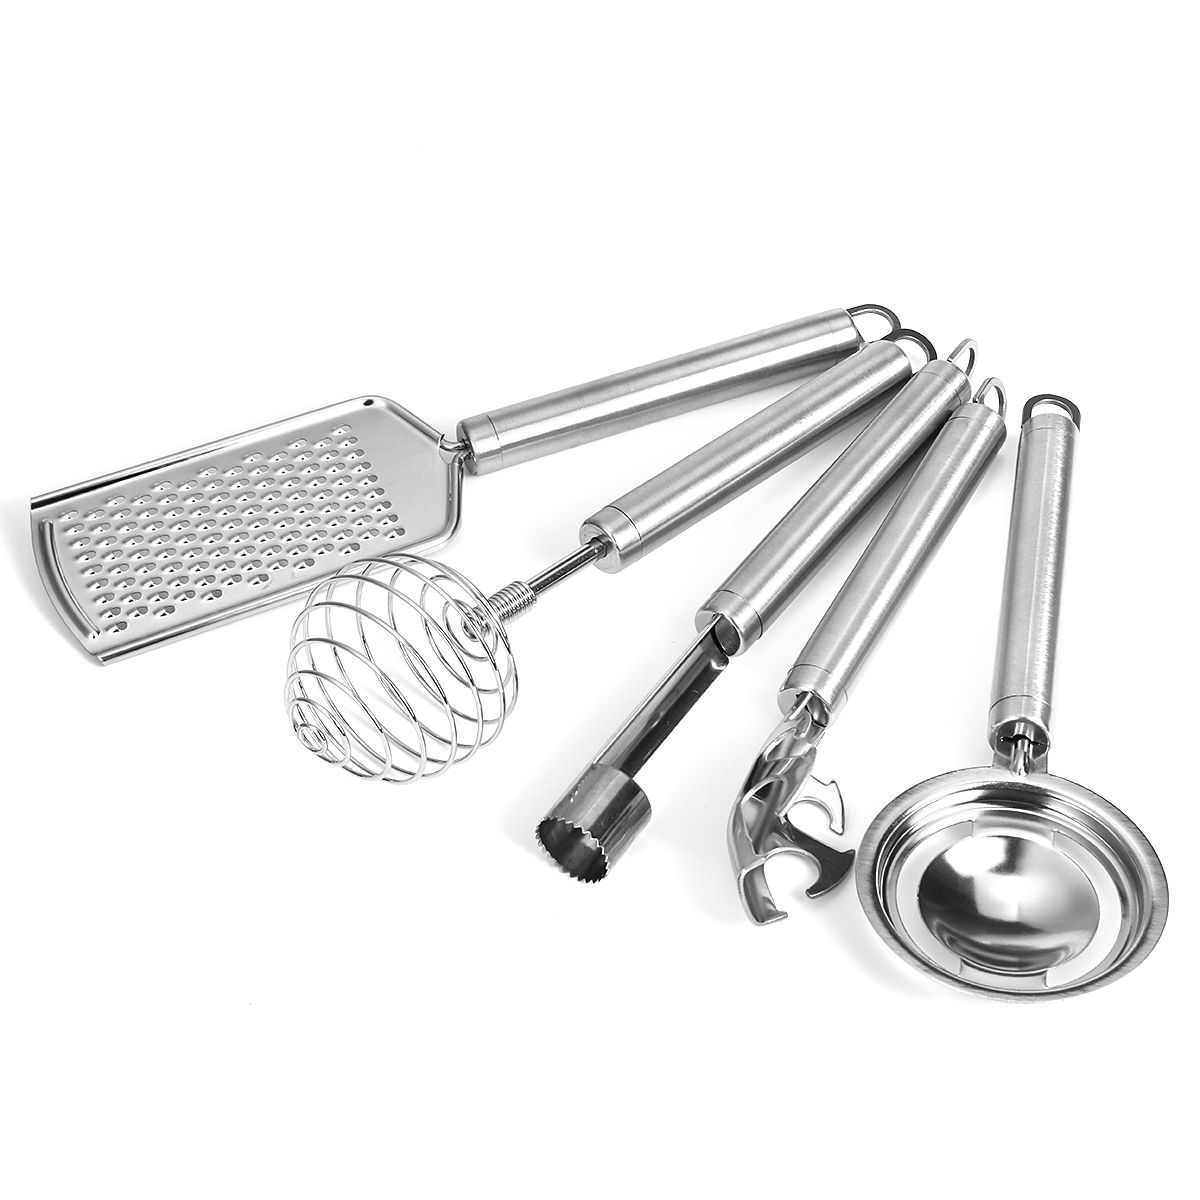 18pcs-Kitchen-Utensils-Set-Stainless-Steel-Non-Stick-Silica-Gel-Cooking-Tools-Kit-1706786